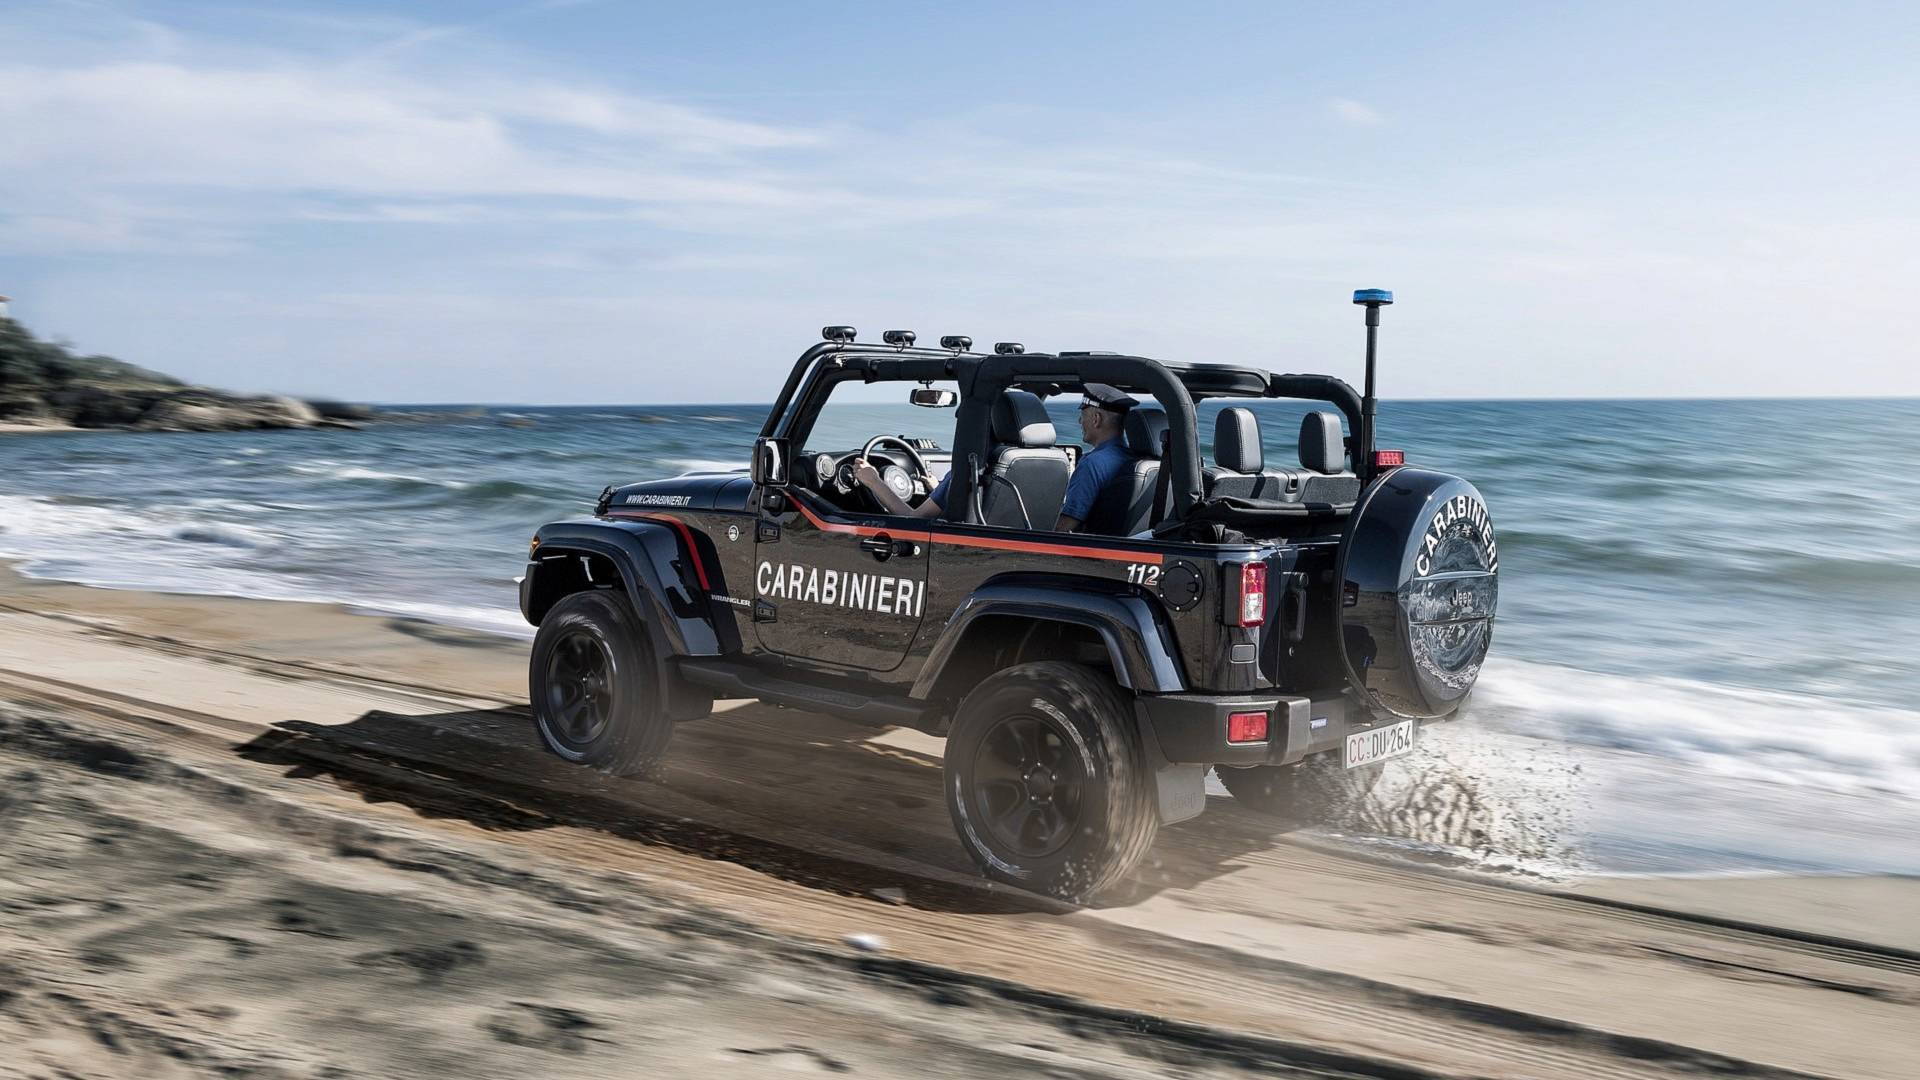 Italian Police add a Jeep Wrangler to patrol the beaches